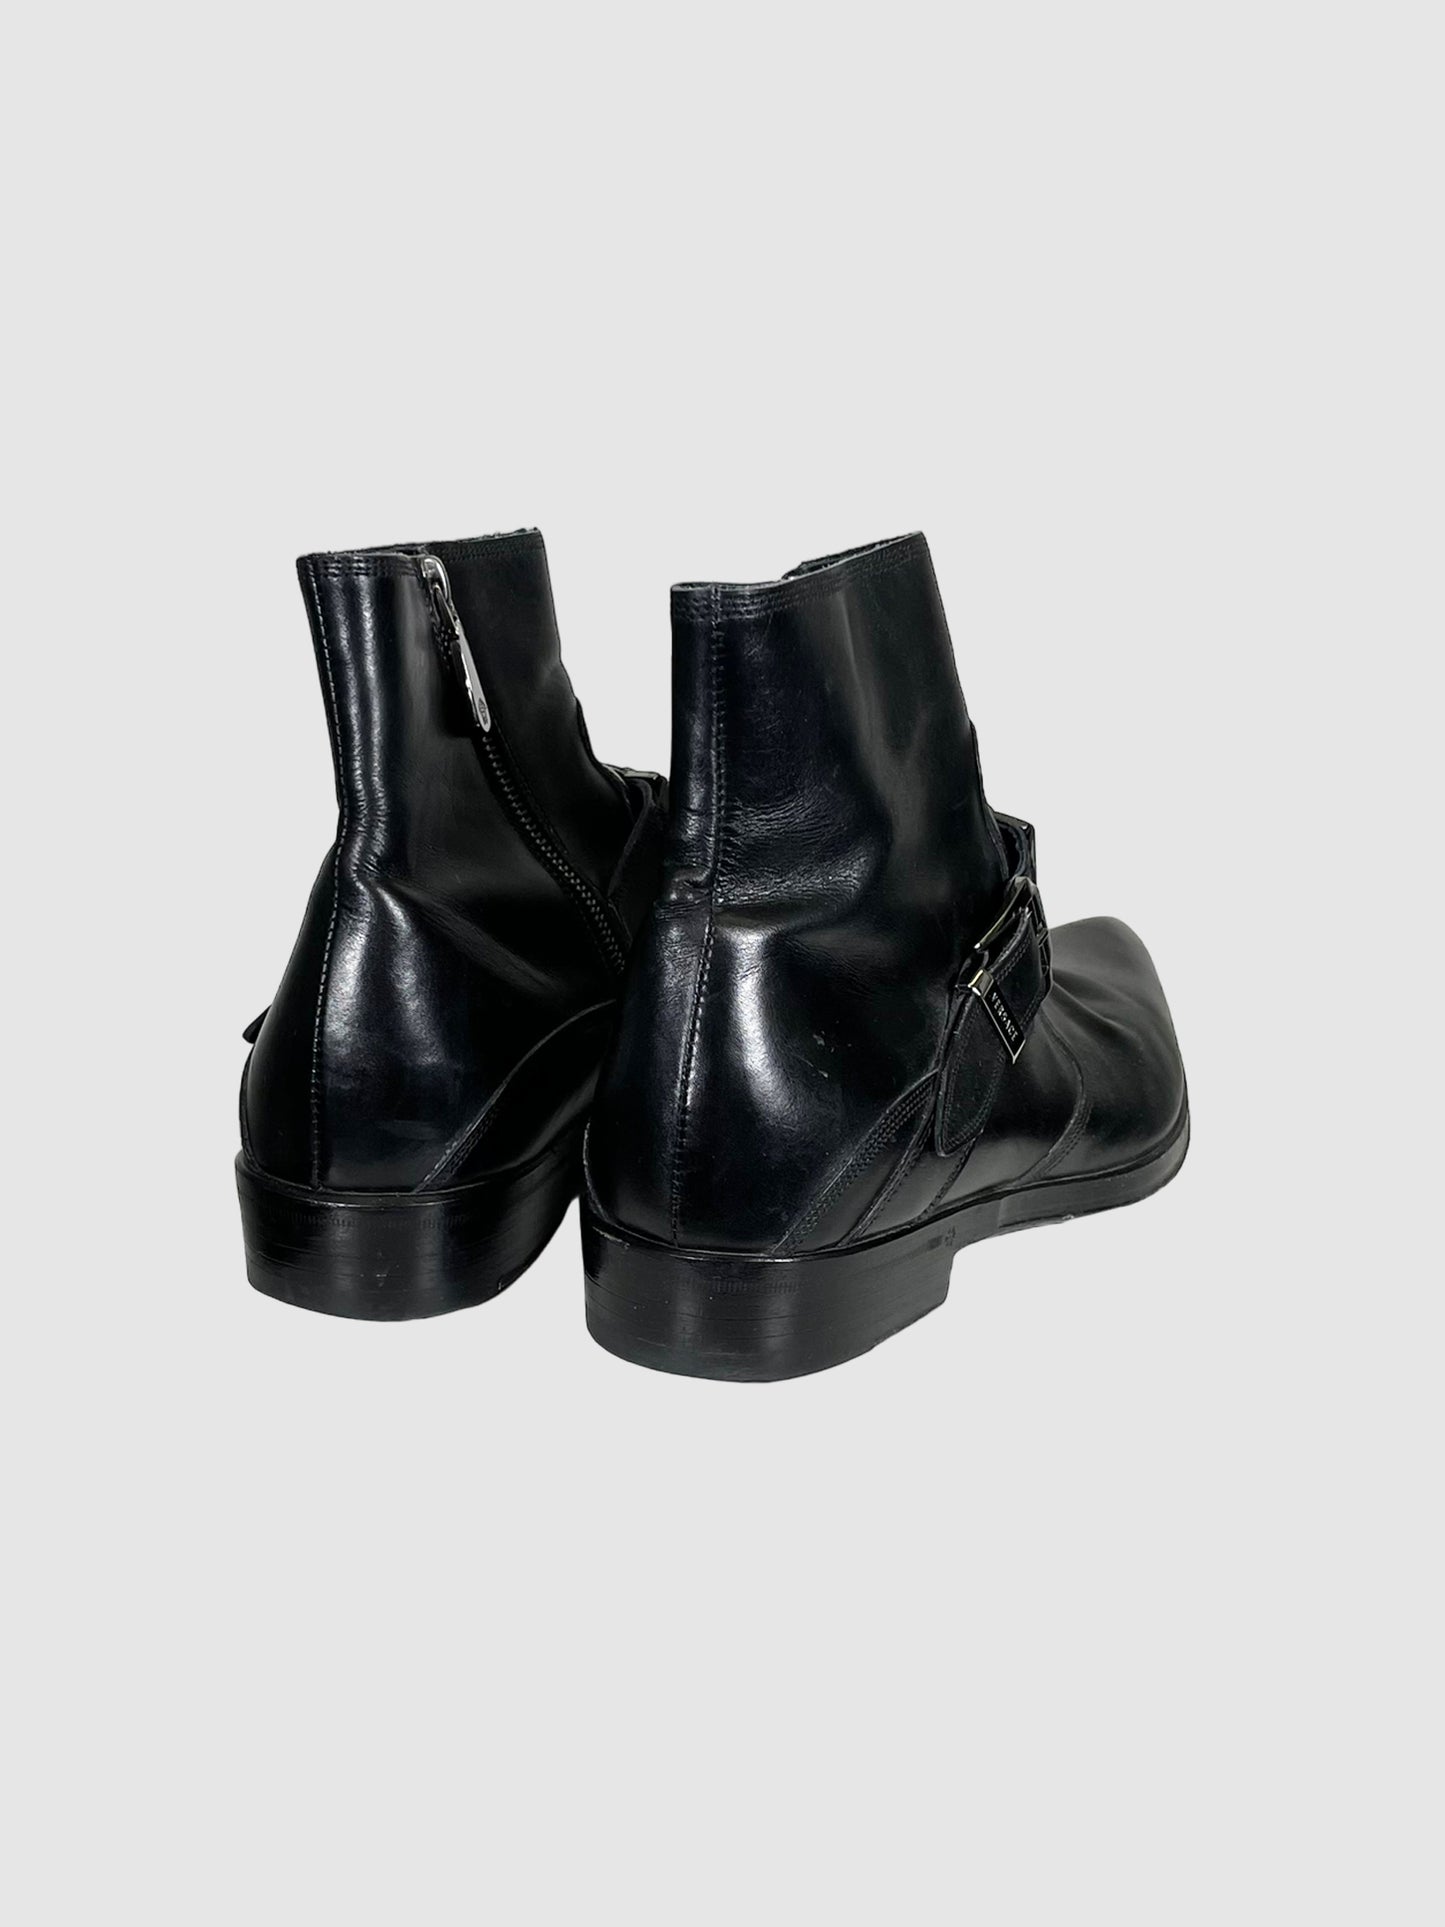 Versace Men's Ankle Boots - Size 41.5